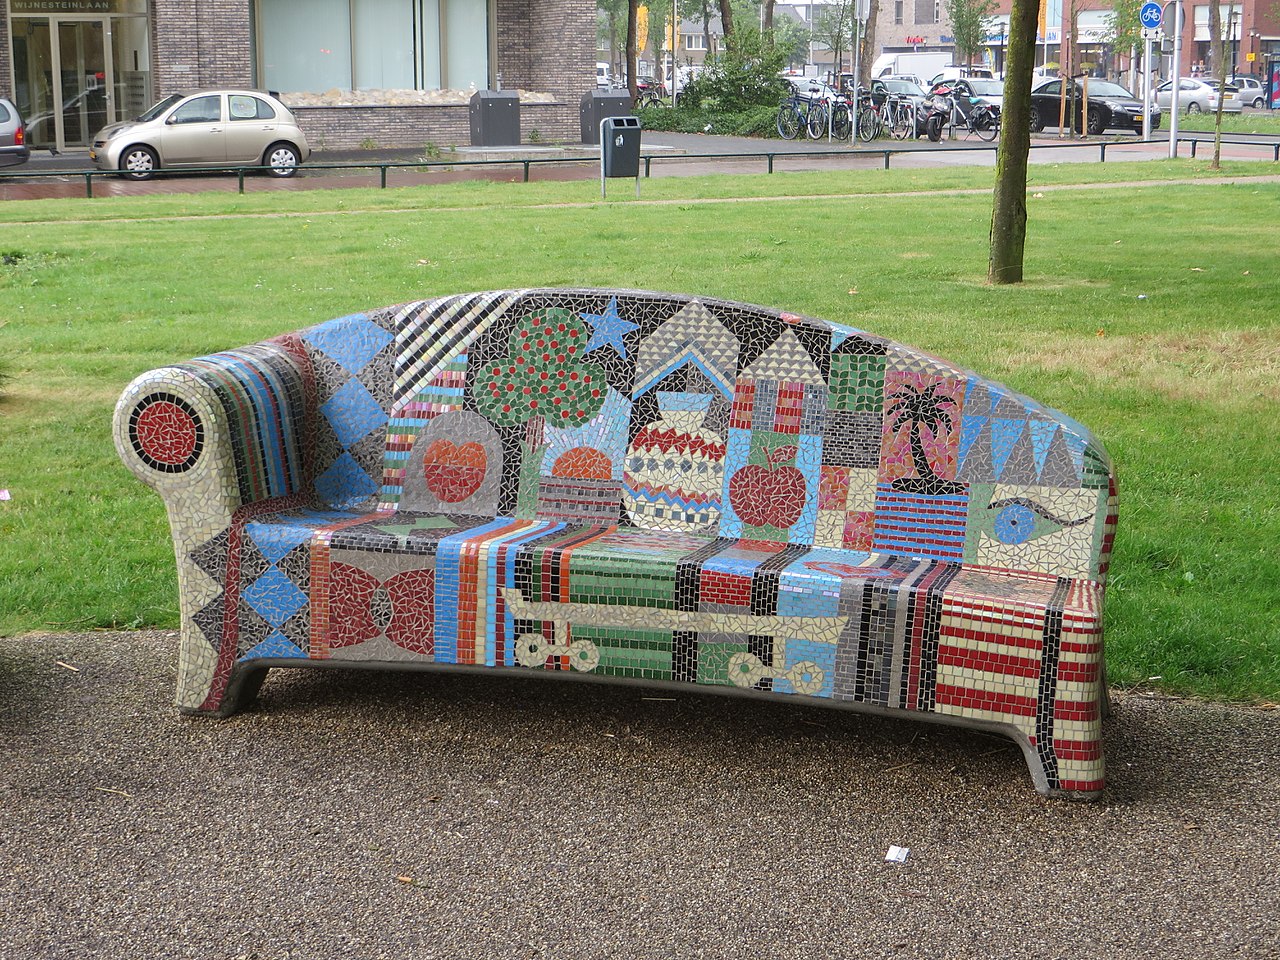 Utrecht's mysteries: What do those mosaic seats do in Utrecht?